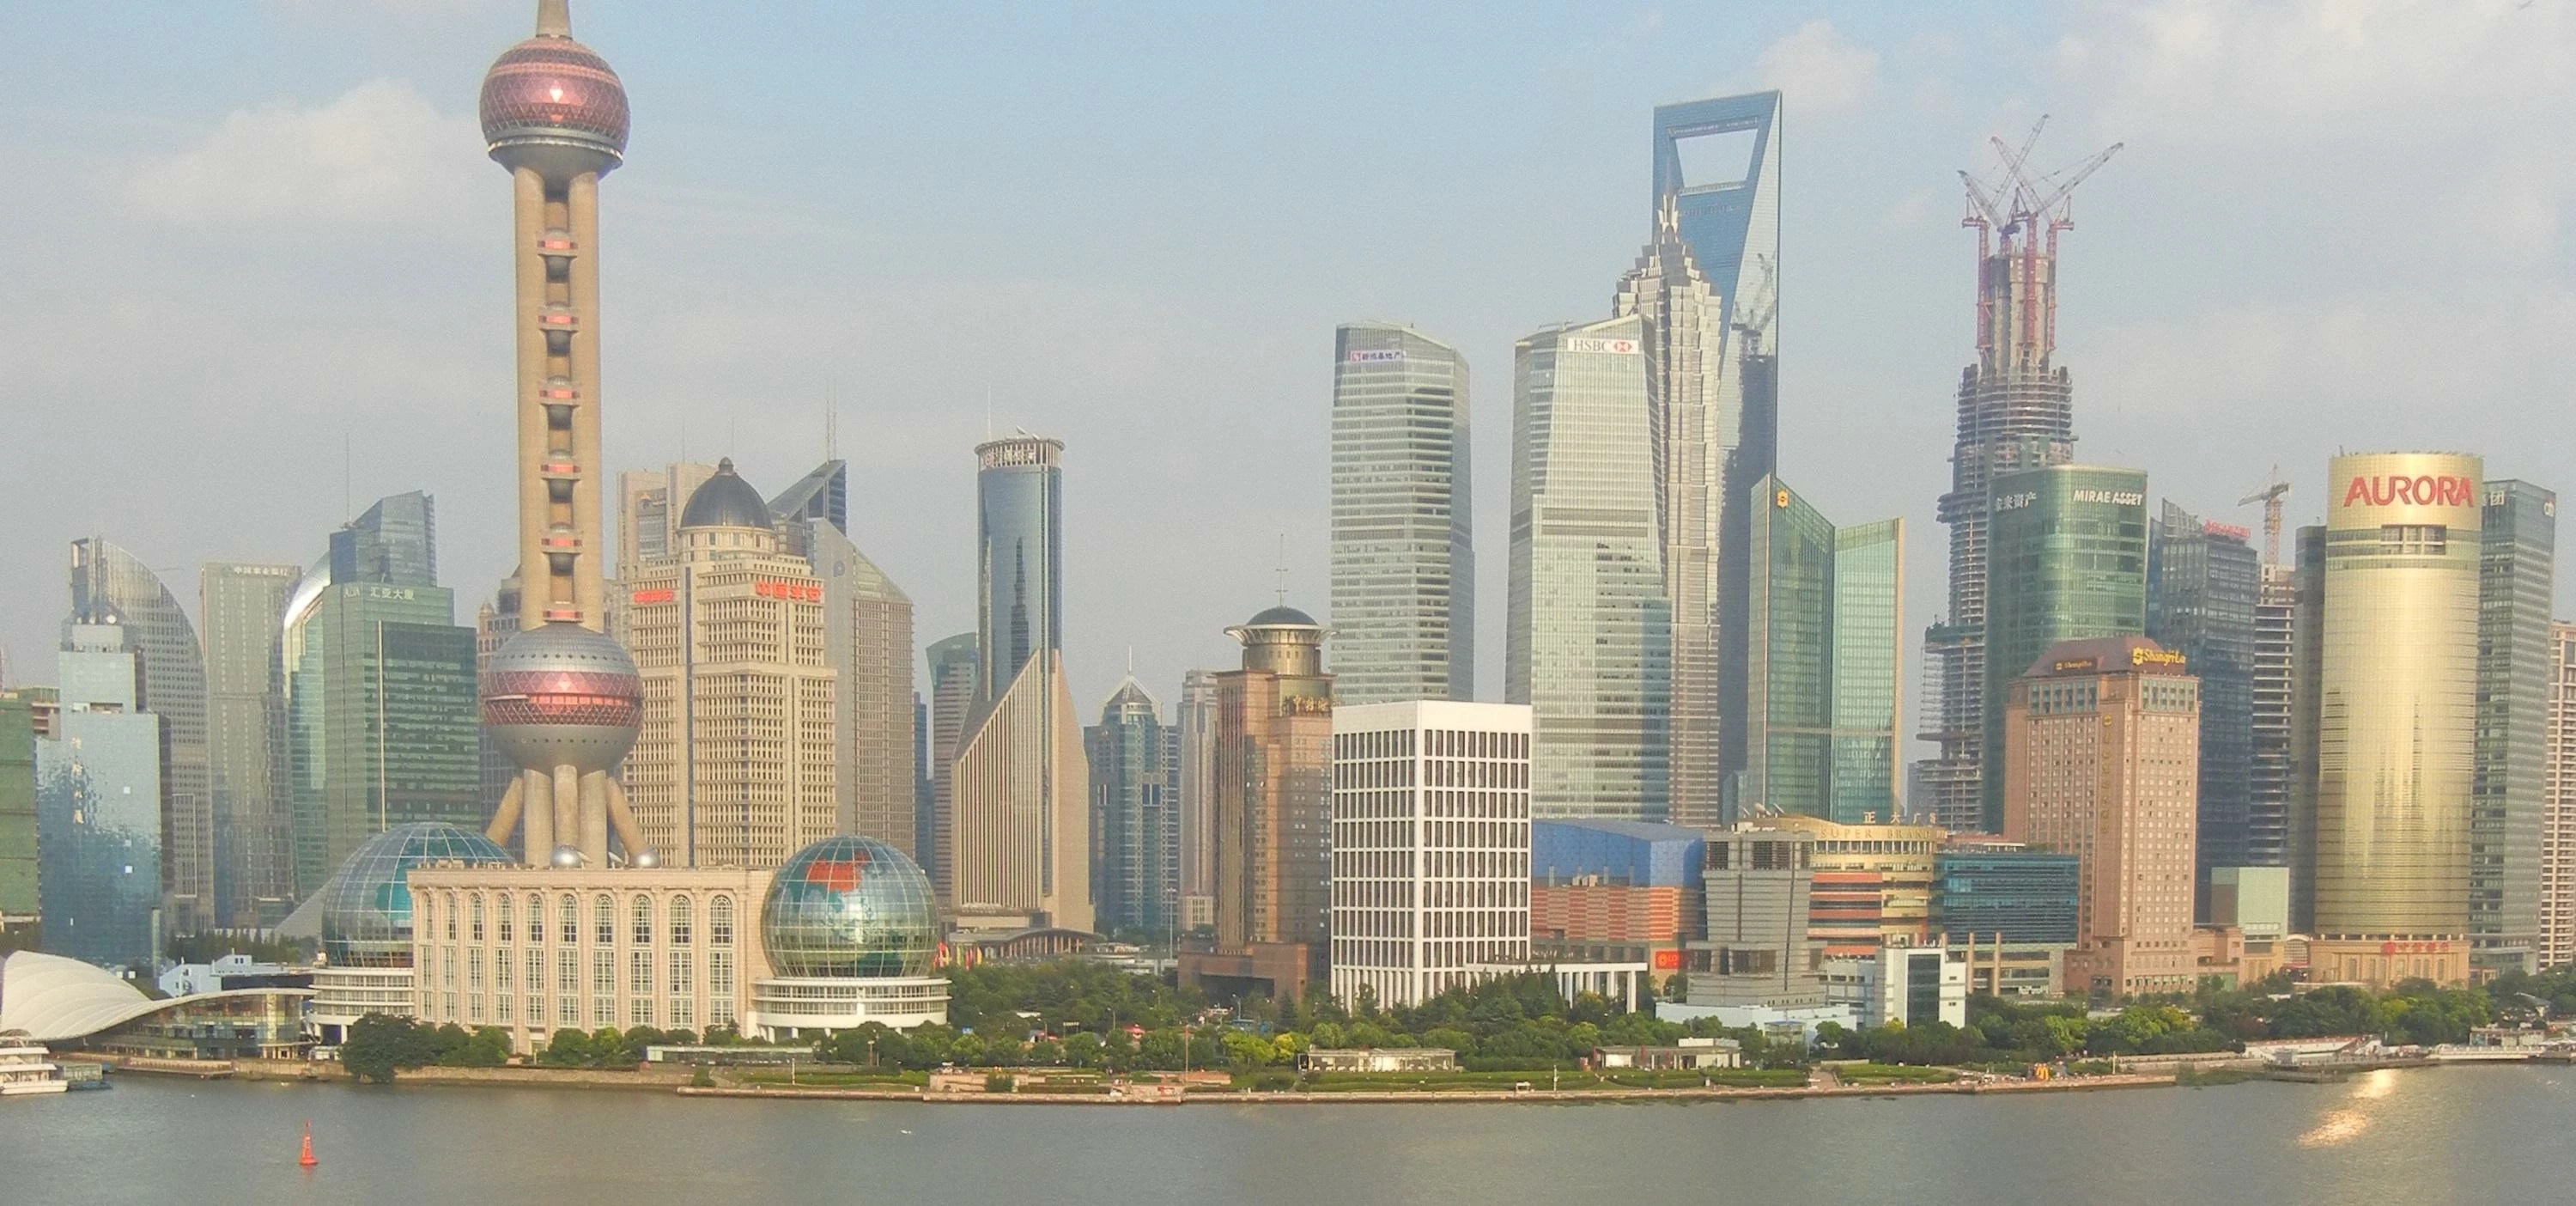 Shanghai - New Pudong